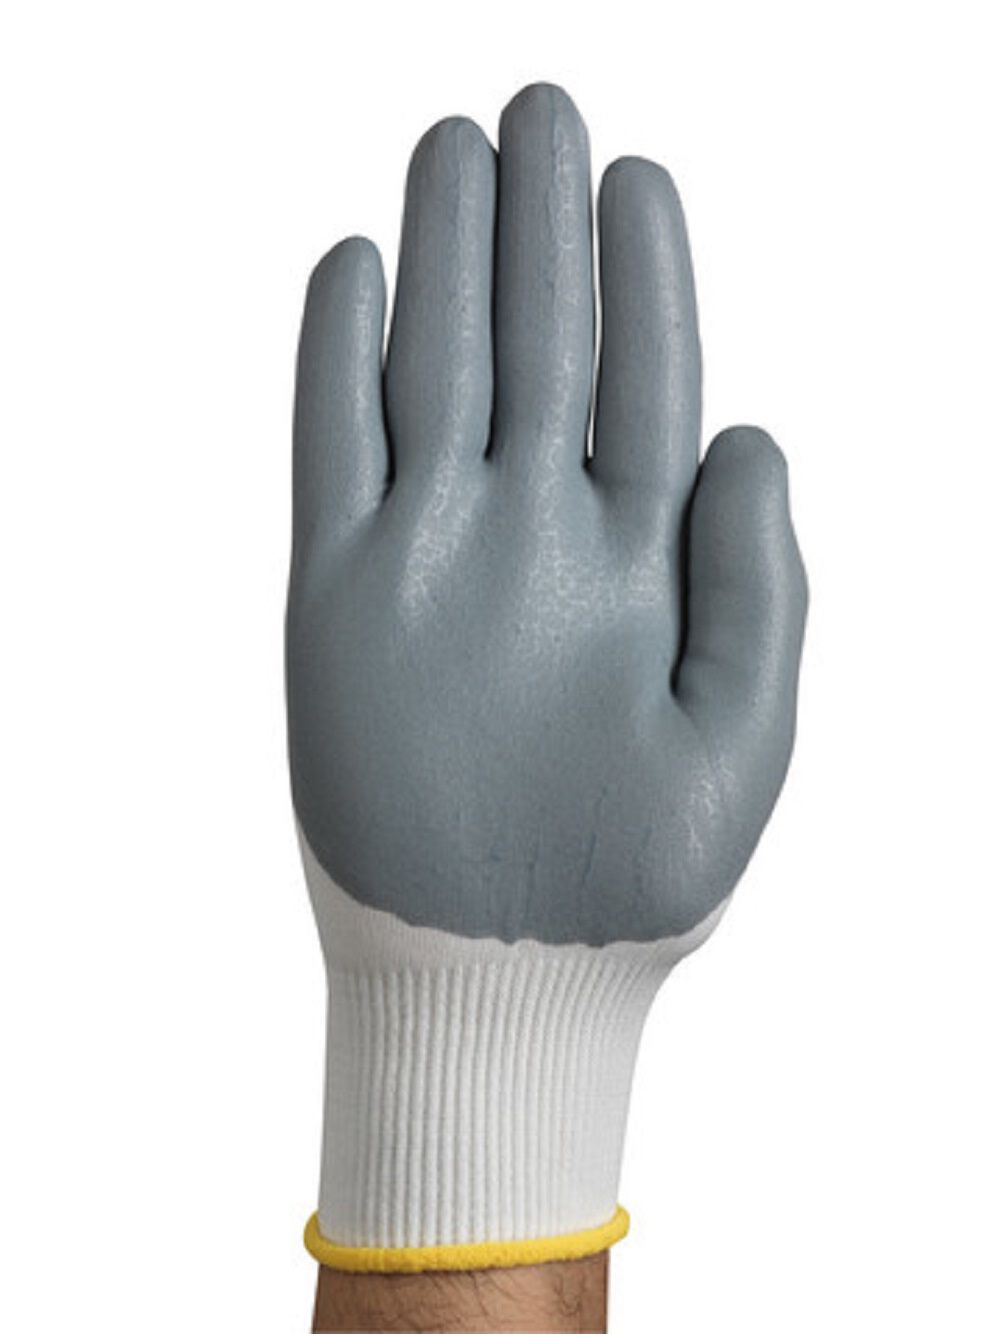 HyFlex Nitrile Glove - Size 8 11-800-8